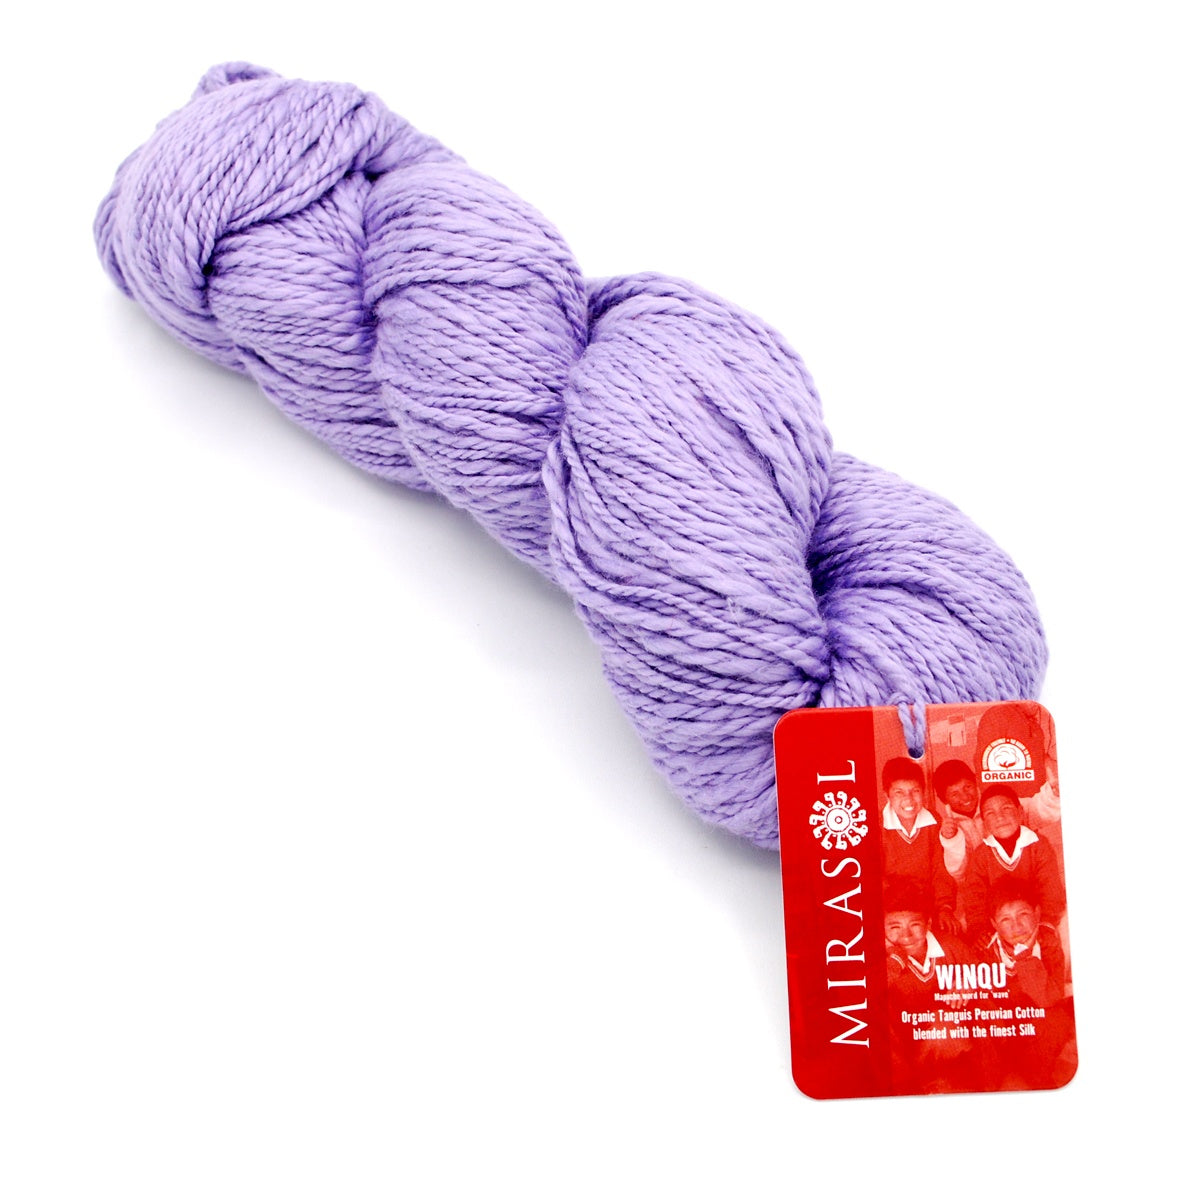 Cotton Yarn, Winqu by Mirasol, Worsted Weight Cotton & Silk Yarn Twisted lavender purple hank